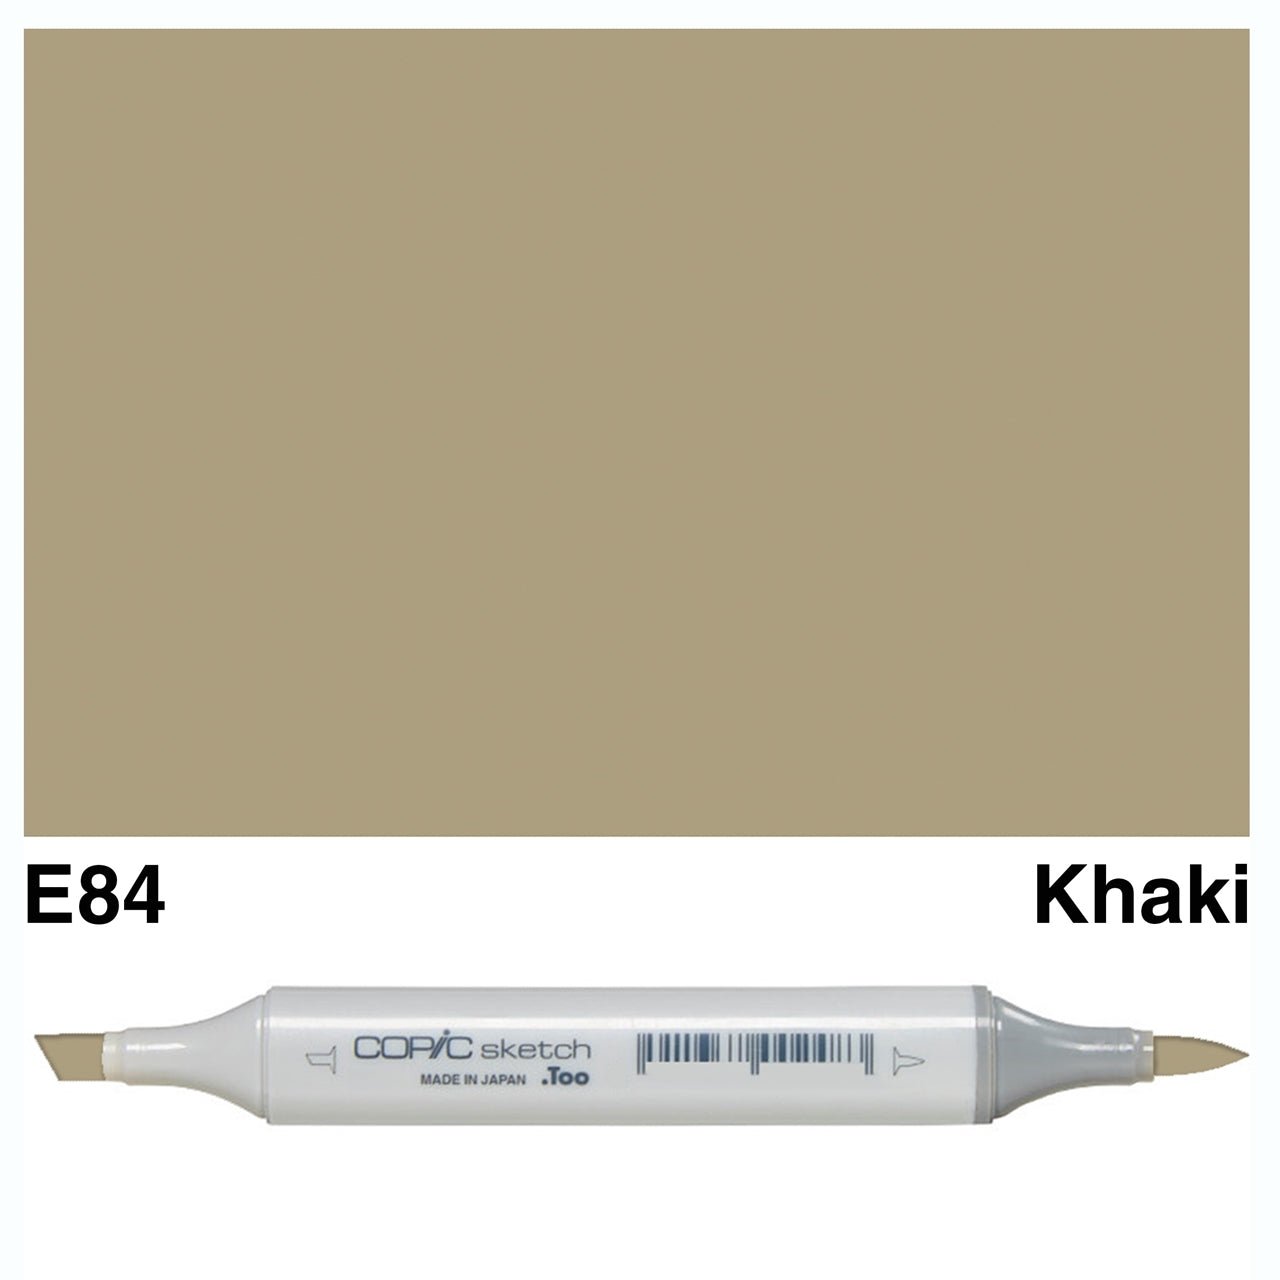 Copic Sketch E84 Khaki - theartshop.com.au